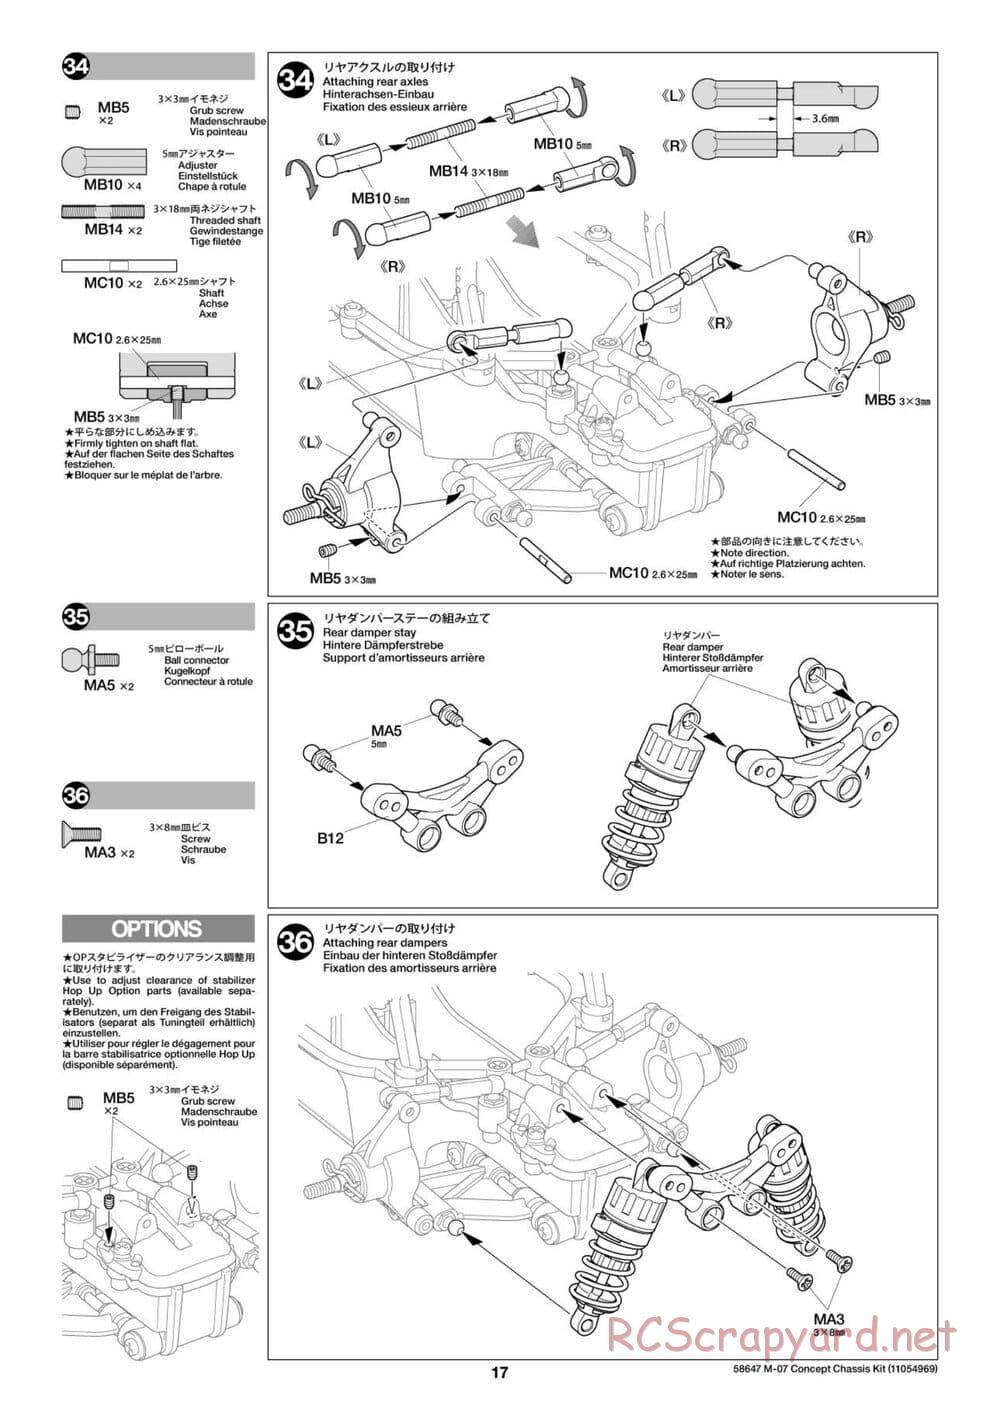 Tamiya - M-07 Concept Chassis - Manual - Page 17